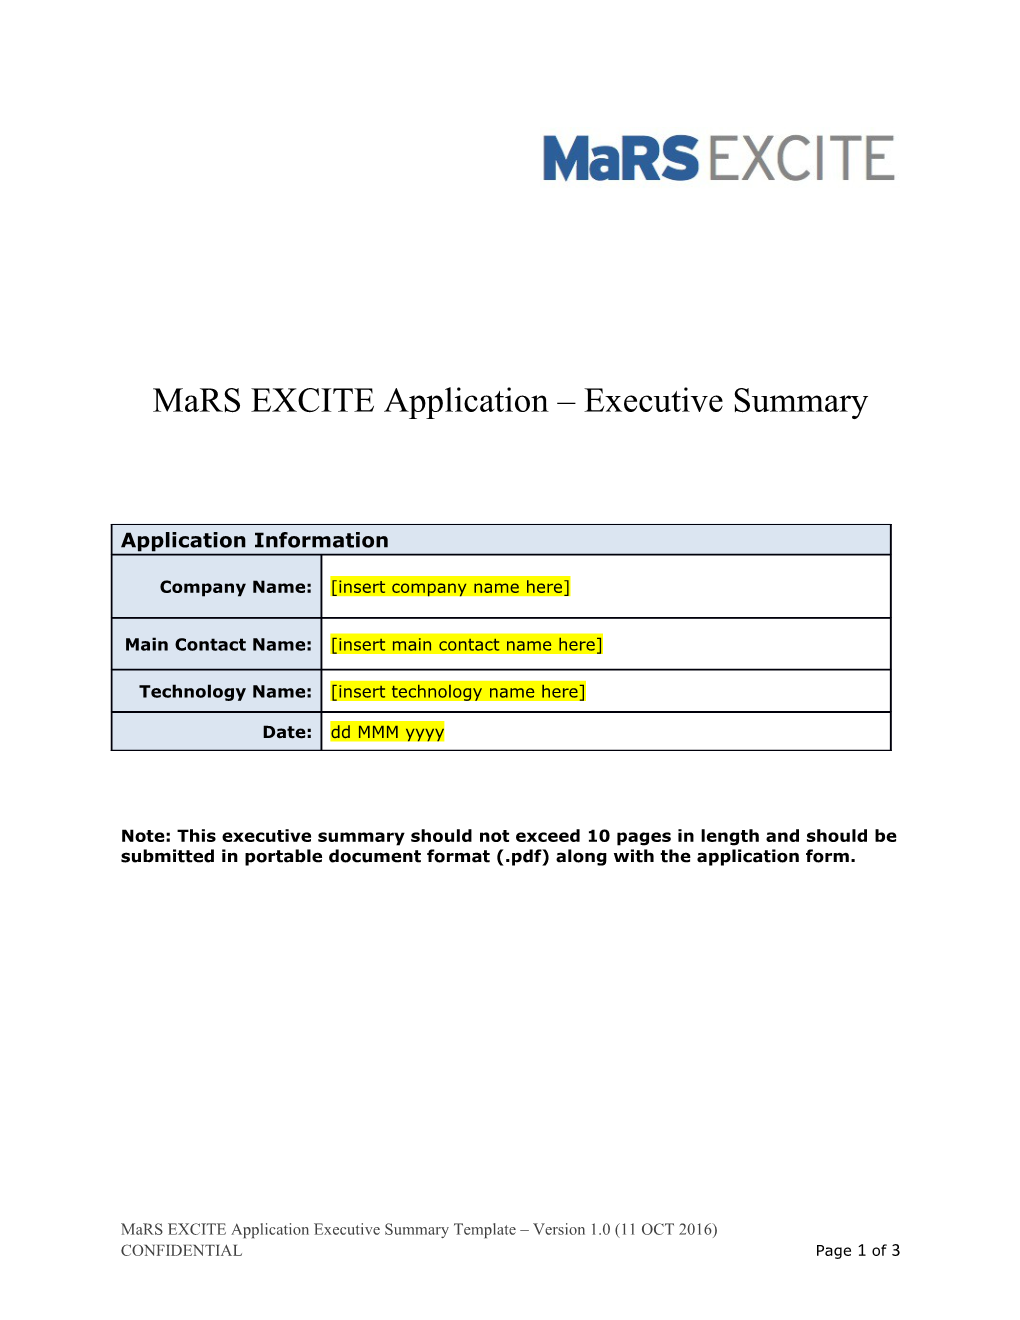 Mars EXCITE Application Executive Summary